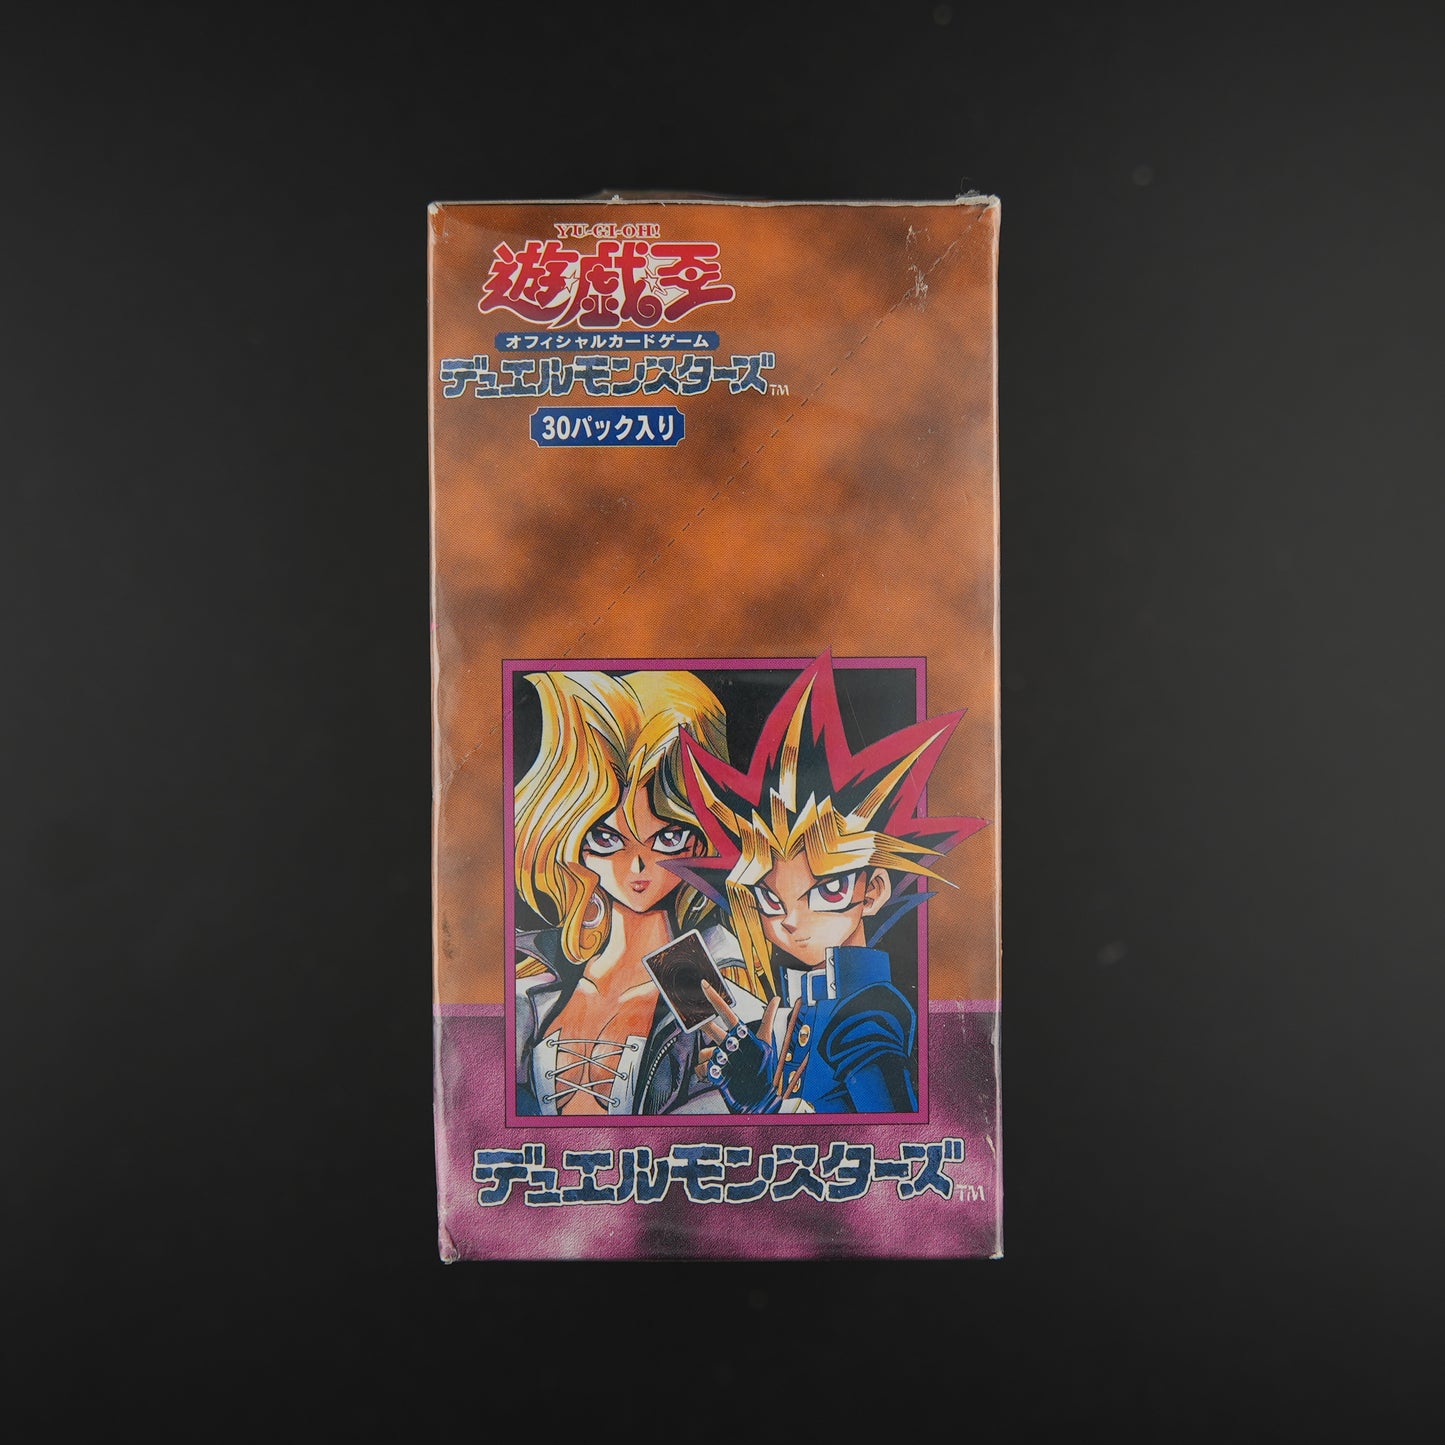 YuGiOh Volume 6 Booster Box Japanese